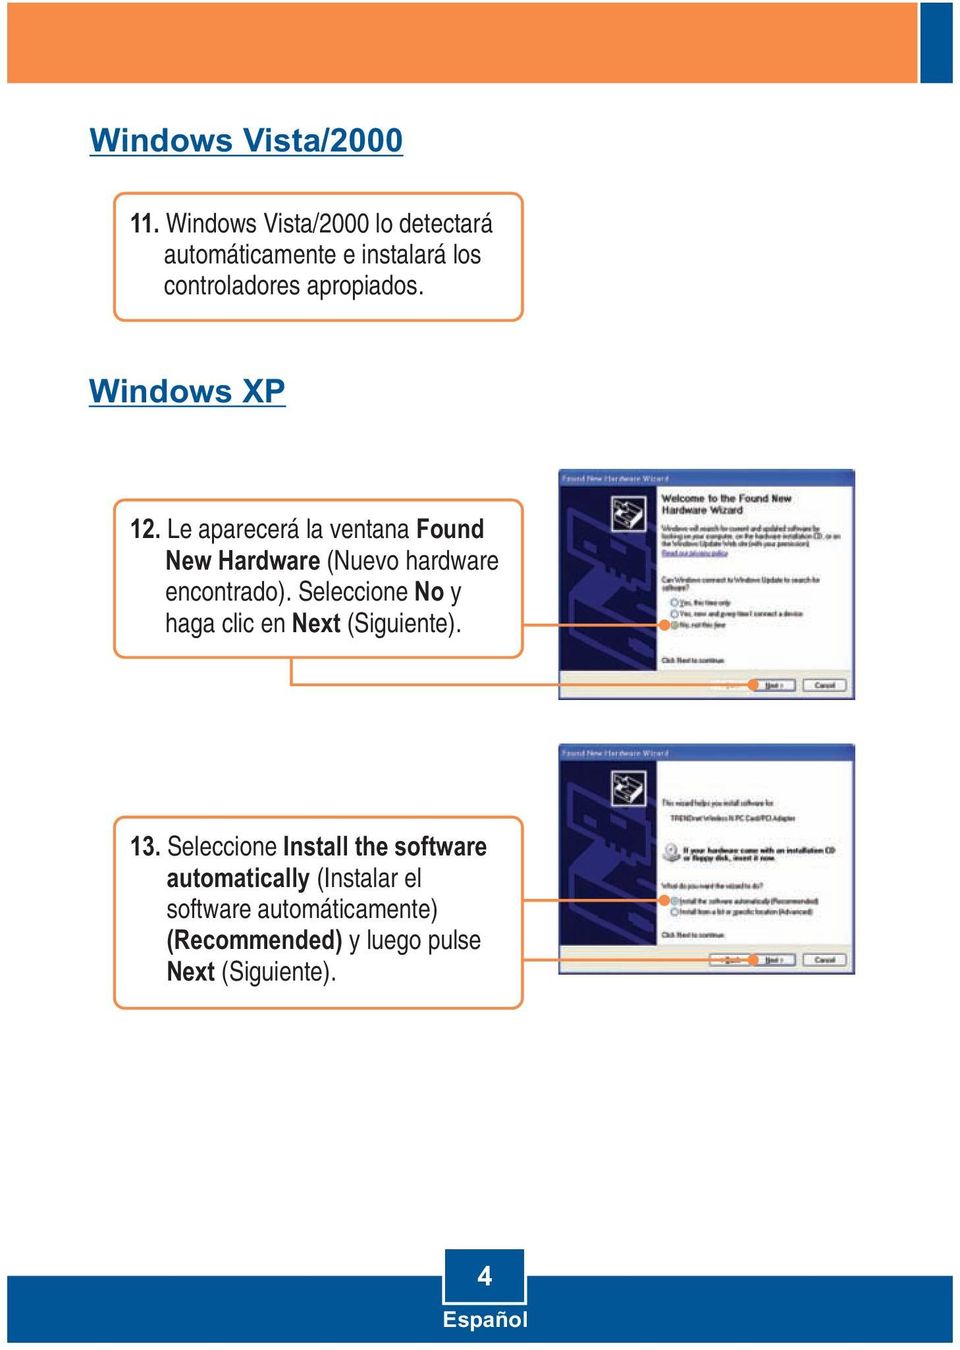 Windows XP 12. Le aparecerá la ventana Found New Hardware (Nuevo hardware encontrado).